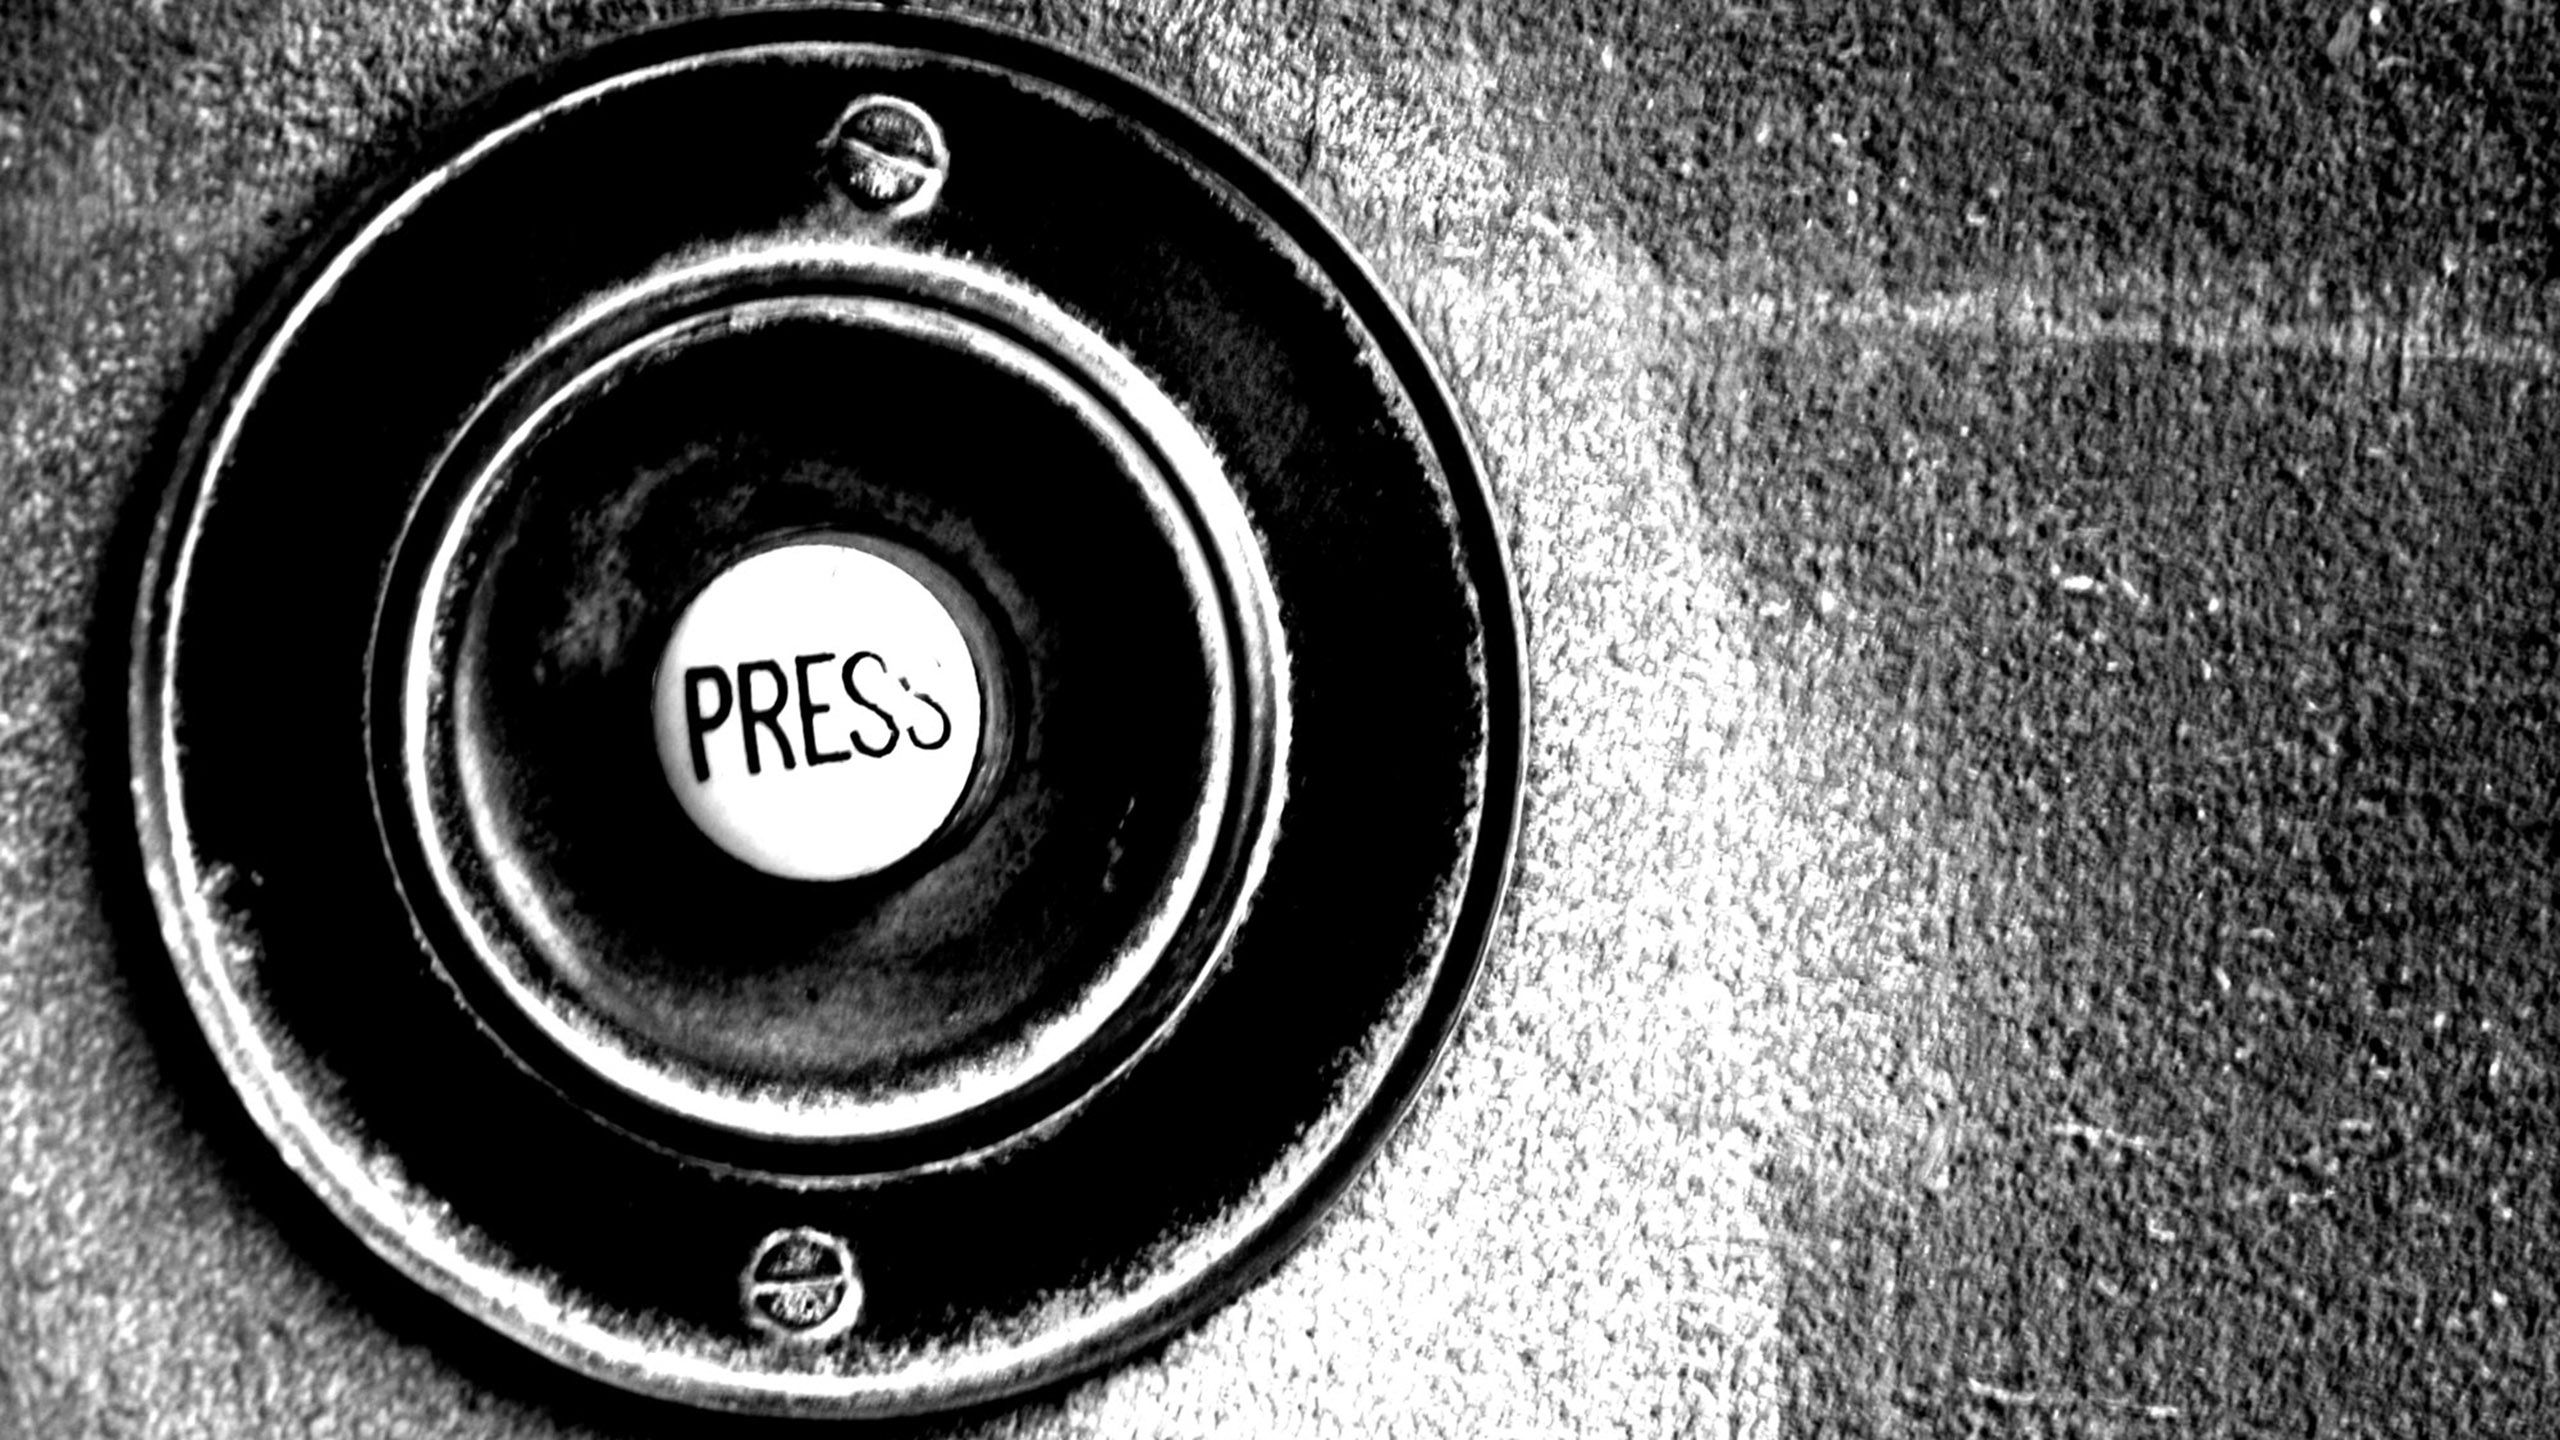 'Press' button